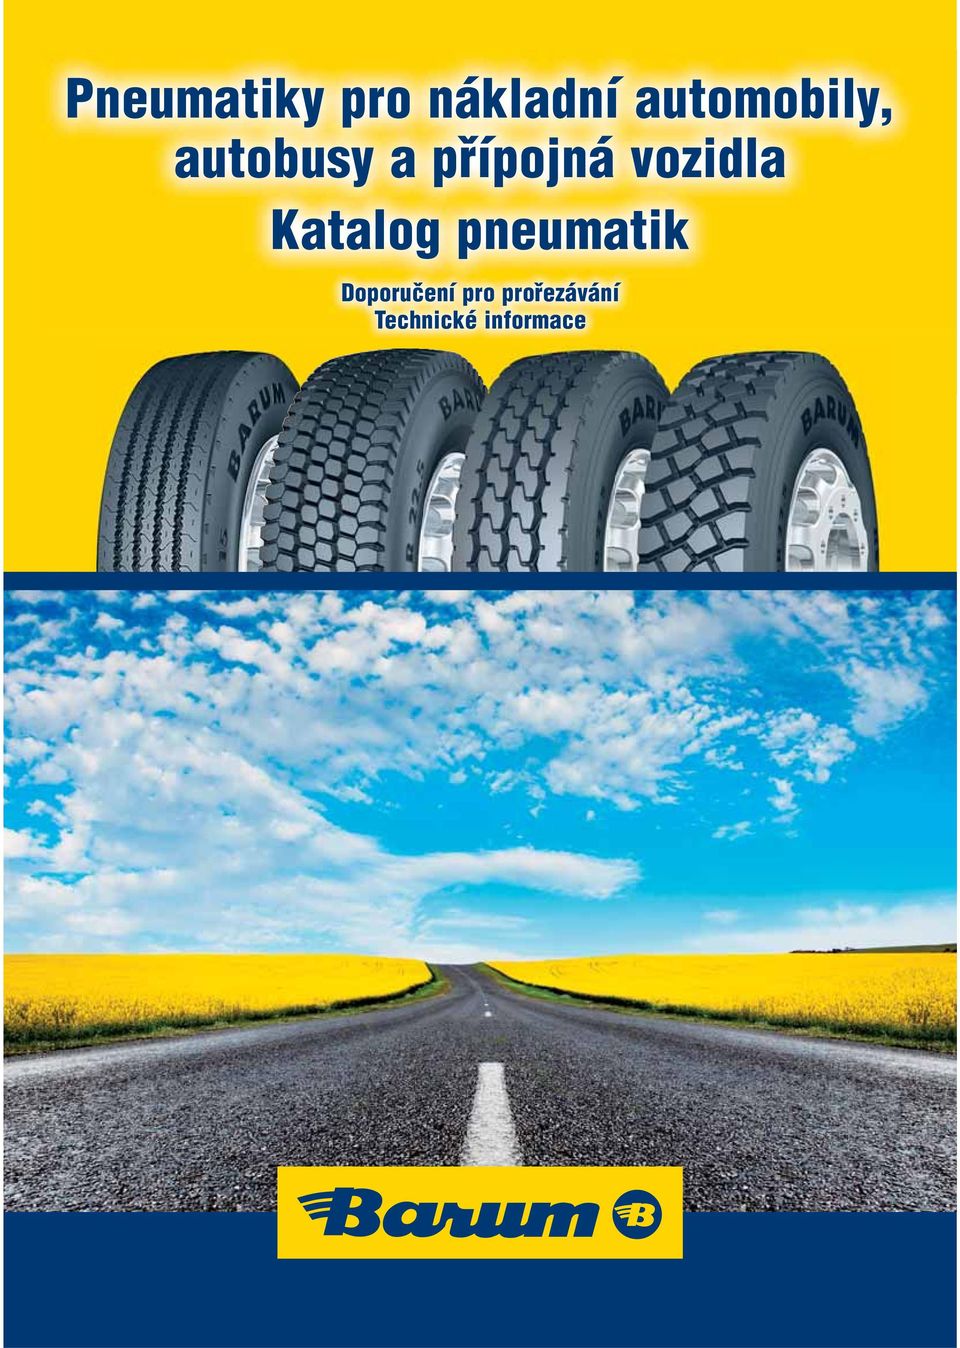 vozidla Katalog pneumatik